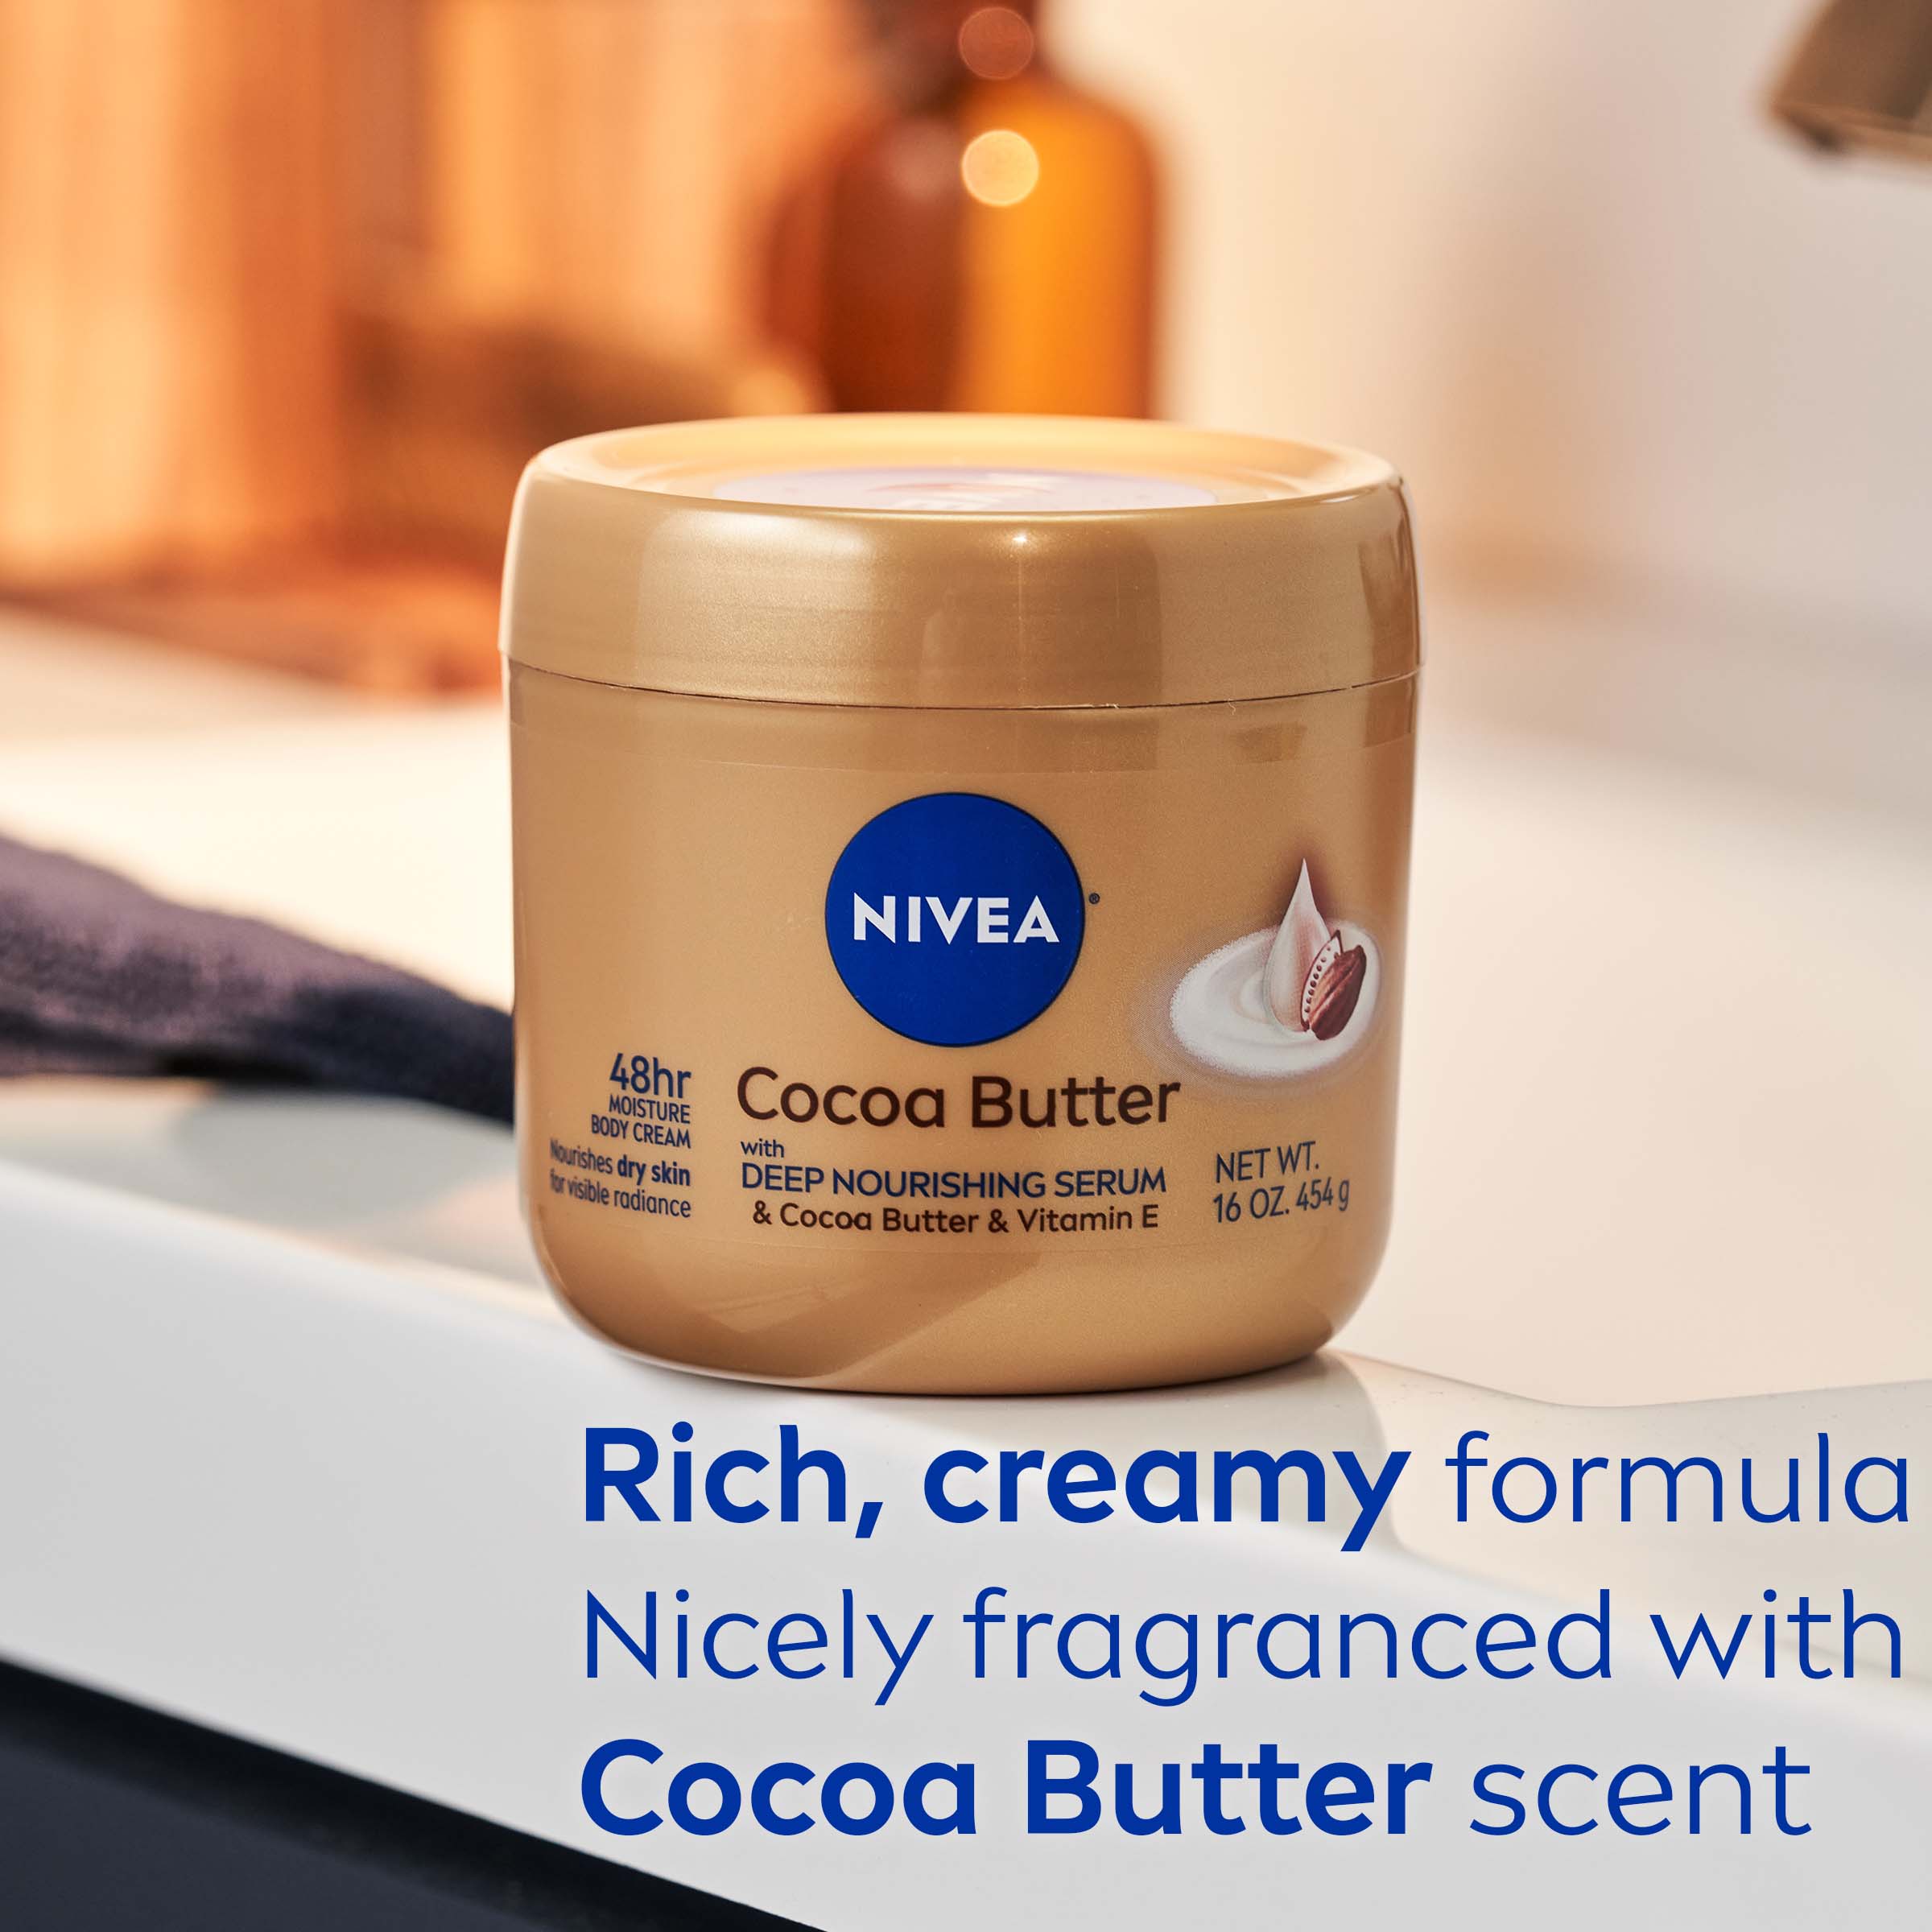 NIVEA Cocoa Butter Body Cream with Deep Nourishing Serum, 16 Ounce - image 8 of 11